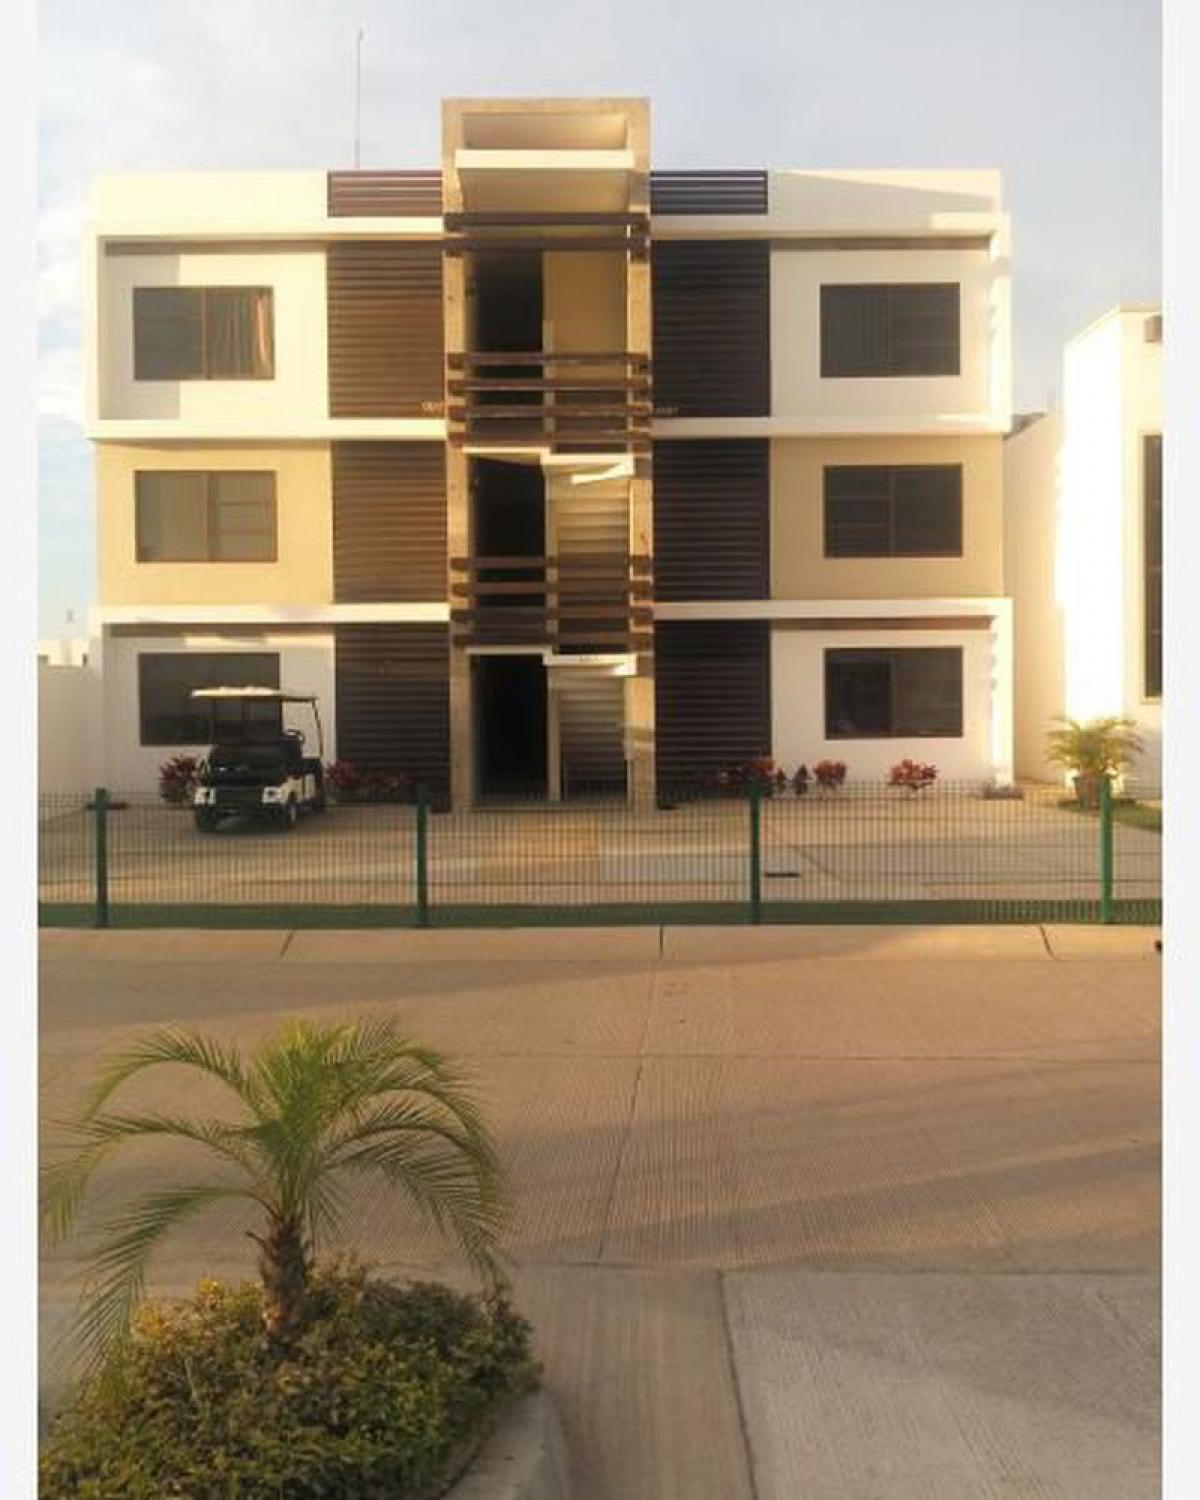 Picture of Apartment For Sale in Sinaloa, Sinaloa, Mexico